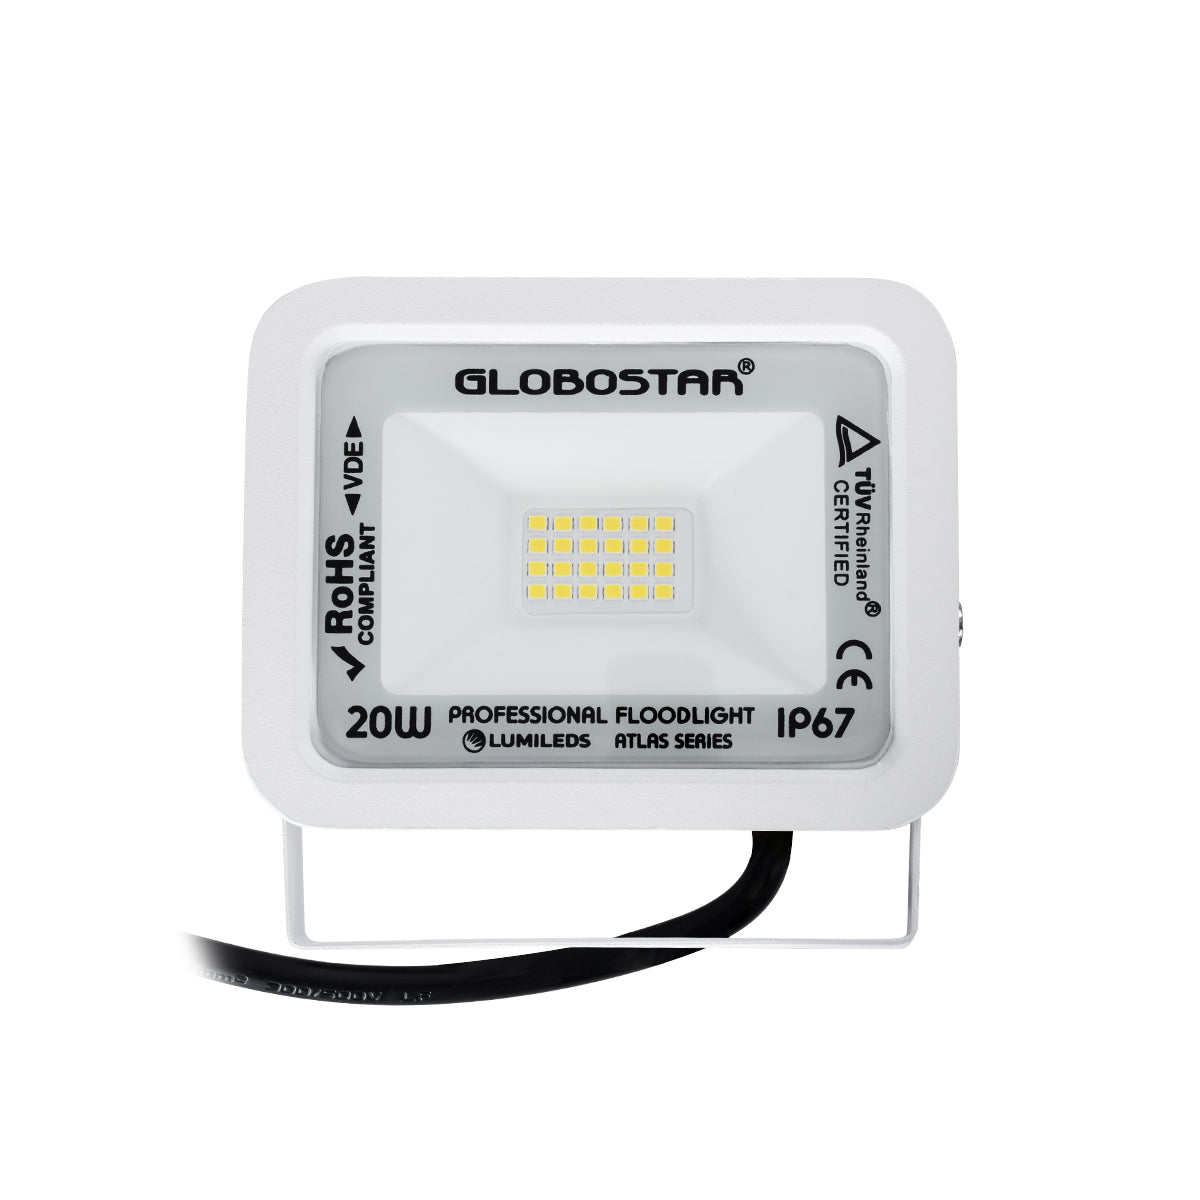 GloboStar® ATLAS 61408 Επαγγελματικός Προβολέας LED 20W 2400lm 120° AC 220-240V - Αδιάβροχος IP67 - Μ12 x Π2.5 x Υ9.5cm - Λευκό - Φυσικό Λευκό 4500K - LUMILEDS Chips - TÜV Rheinland Certified - 5 Years Warranty